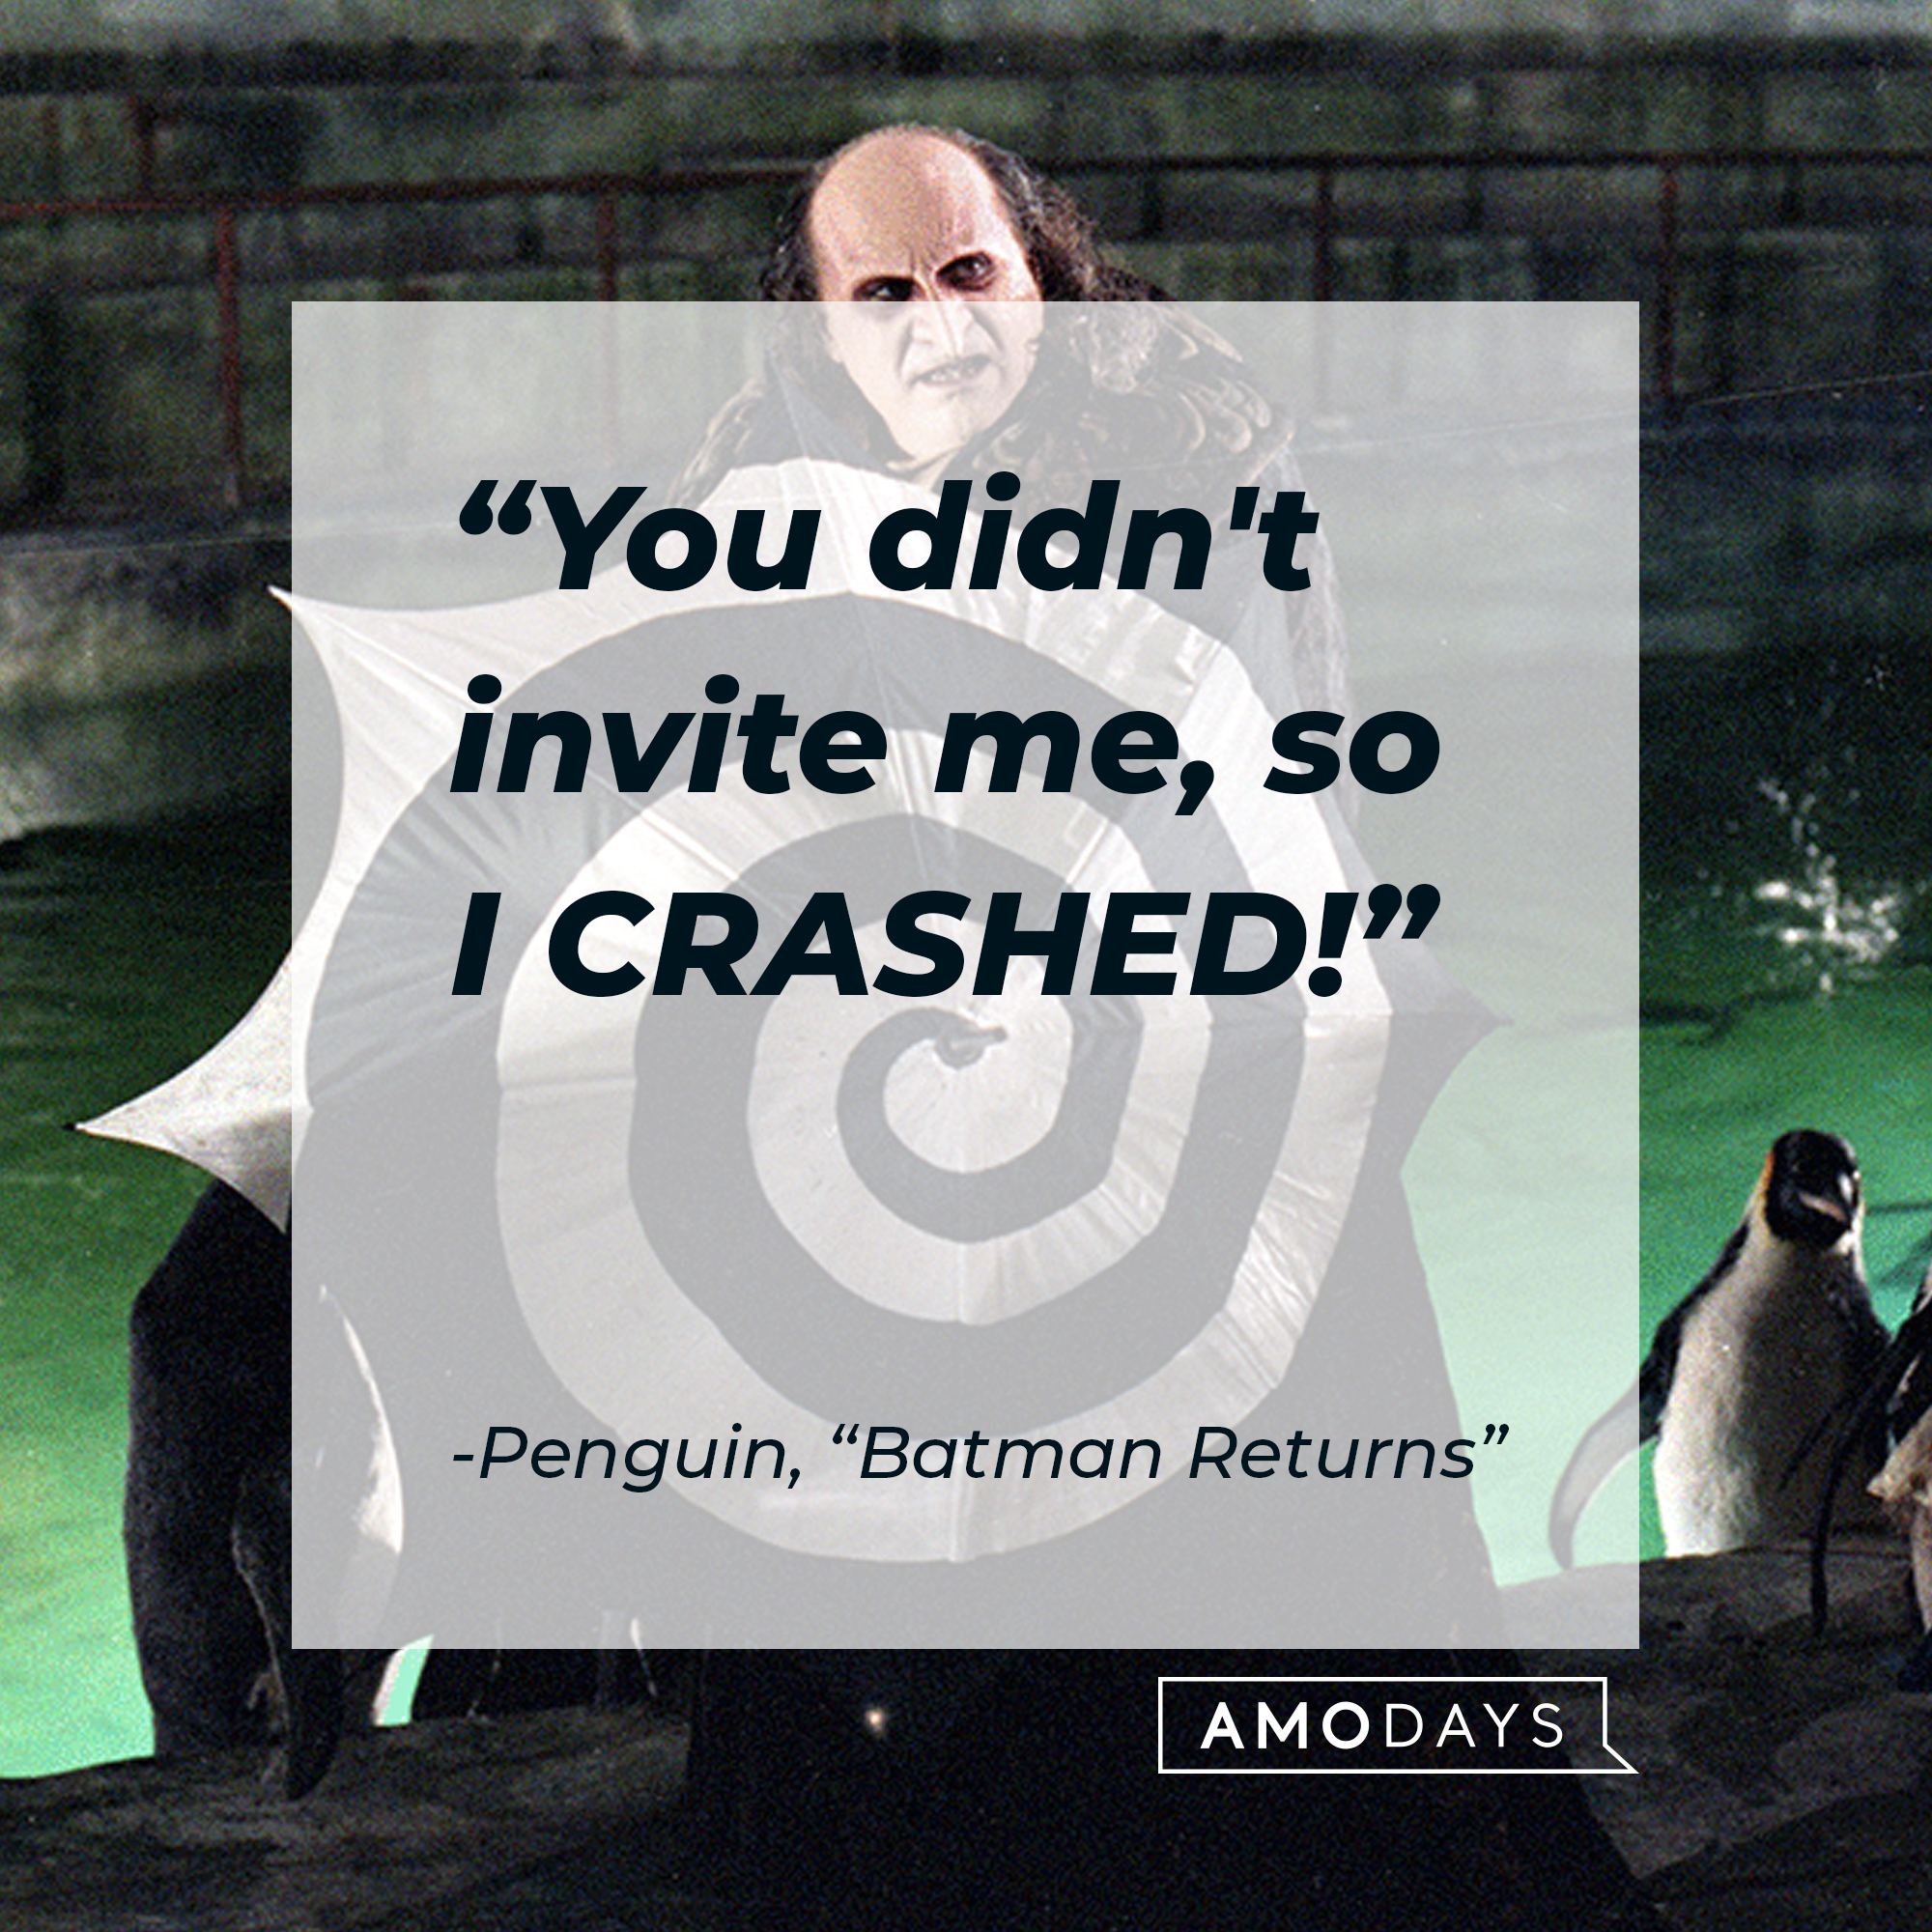 Penguin's quote from "Batman Returns" : "You didn't invite me, so I CRASHED!" | Source: facebook.com/BatmanReturnsFilm